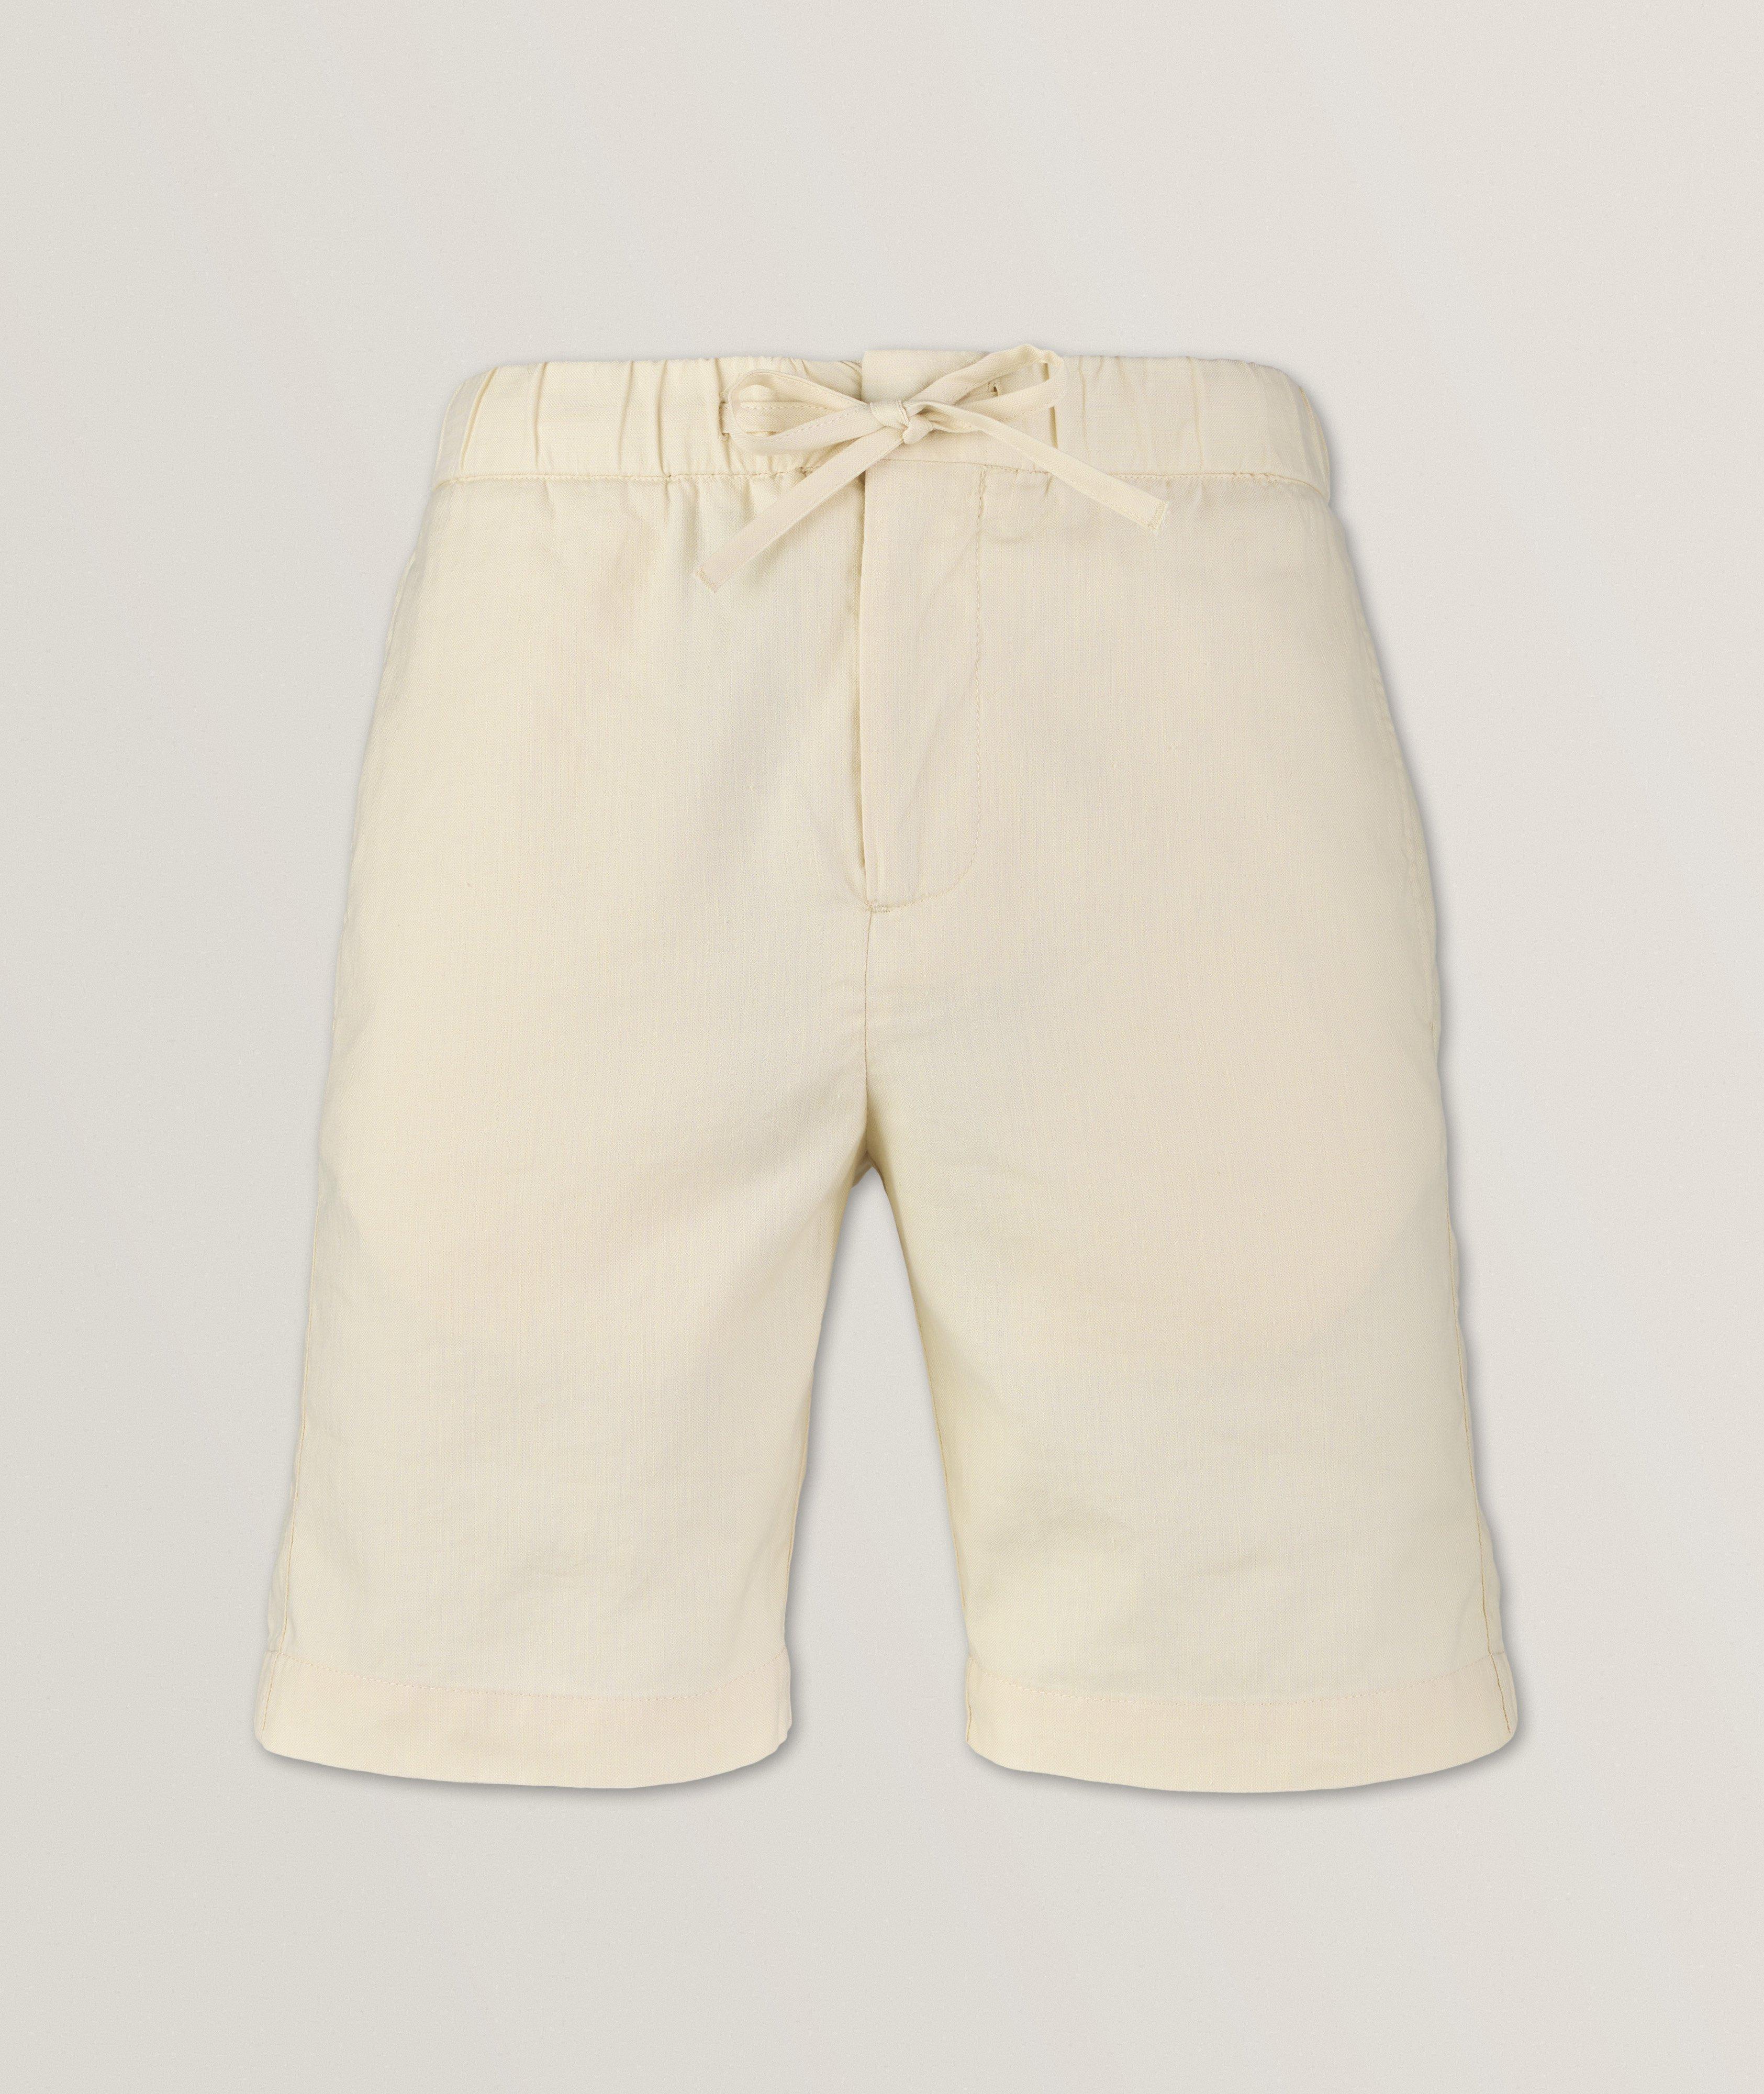 Felipe Linen-Cotton Shorts image 0